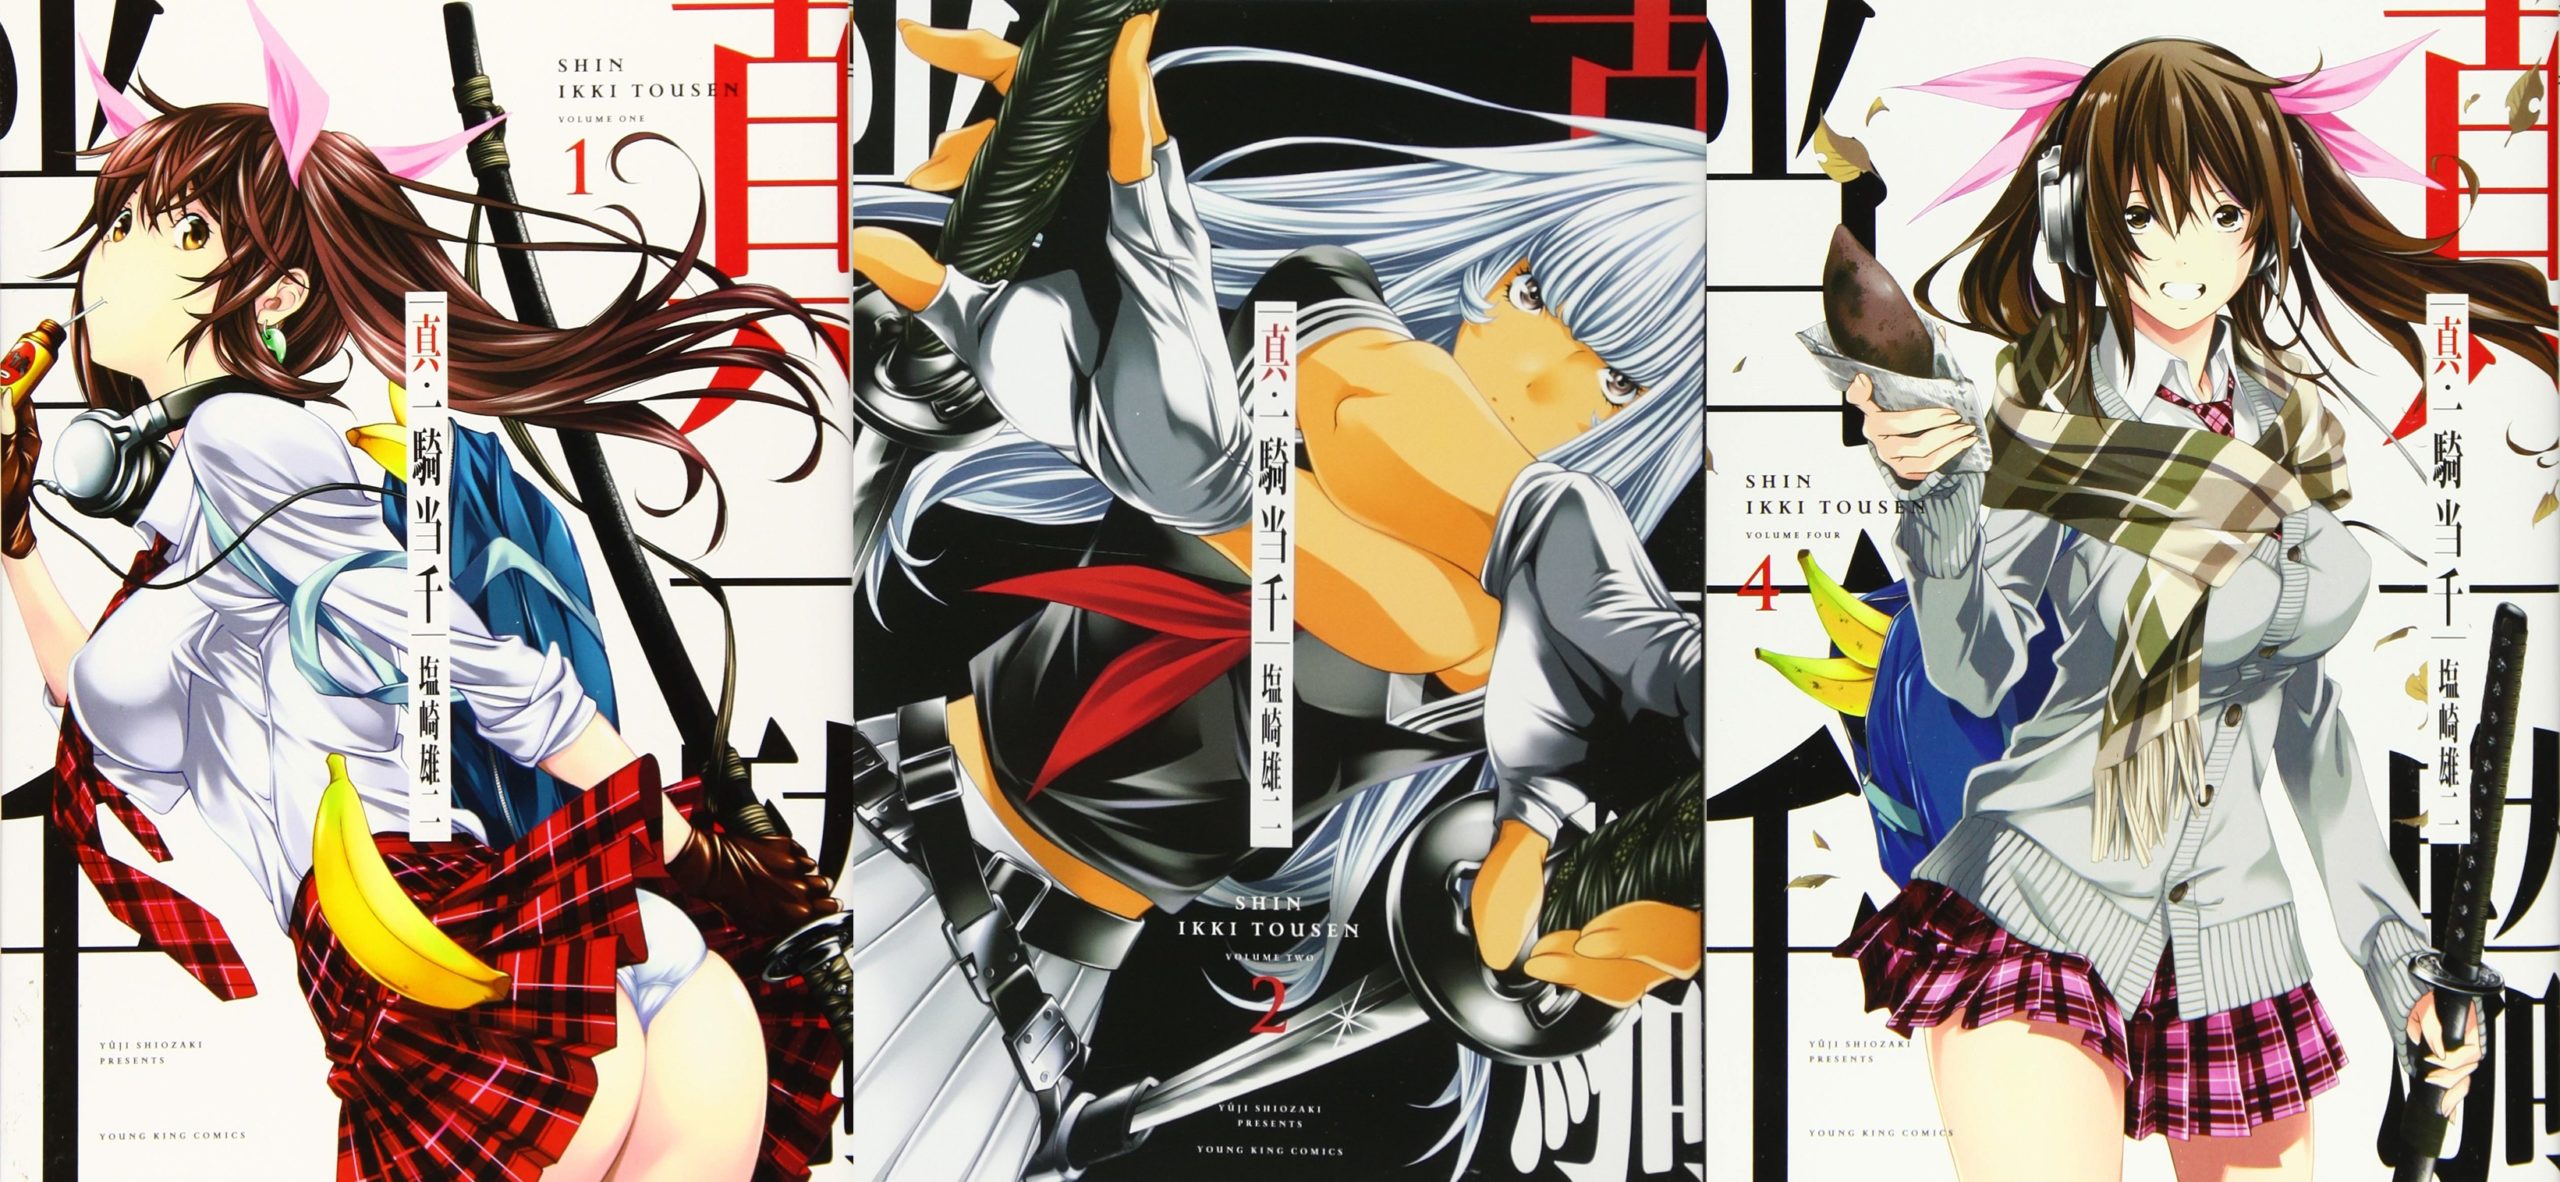 Manga Shin Ikki Tousen terá anime em 2022